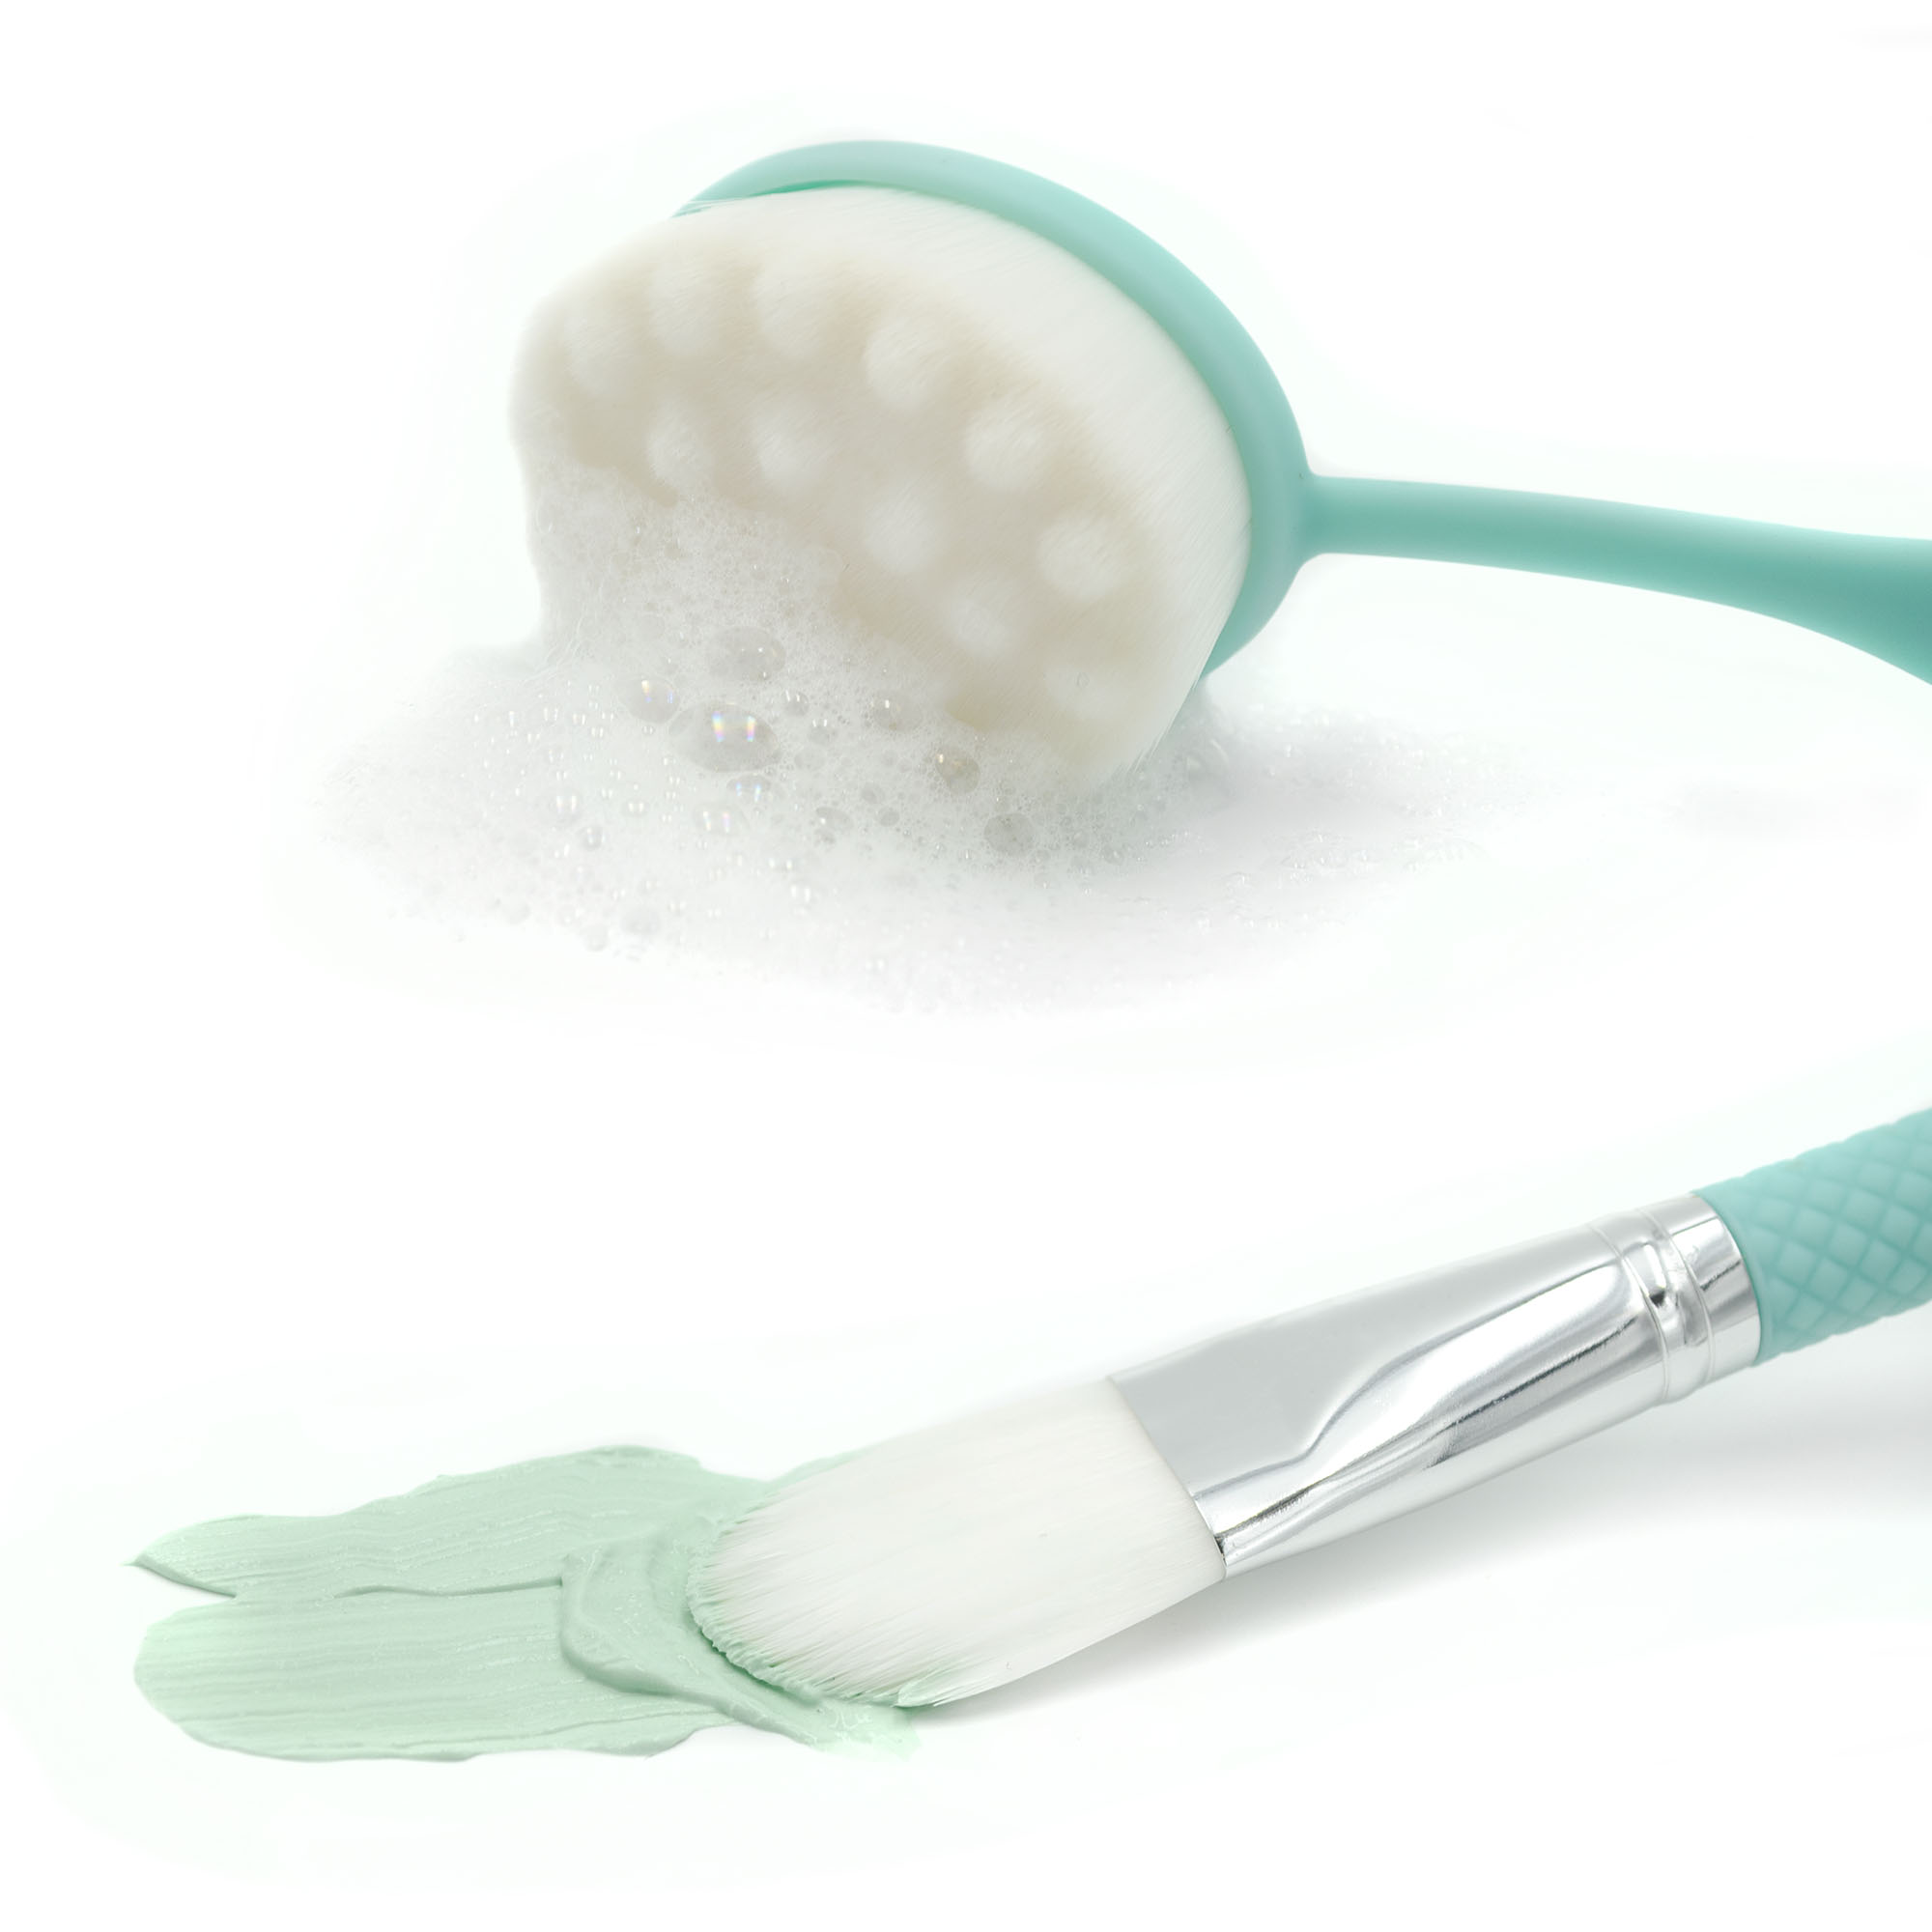 MODA Makeup Brushes Spa Facial Treatment & Cleansing Kit